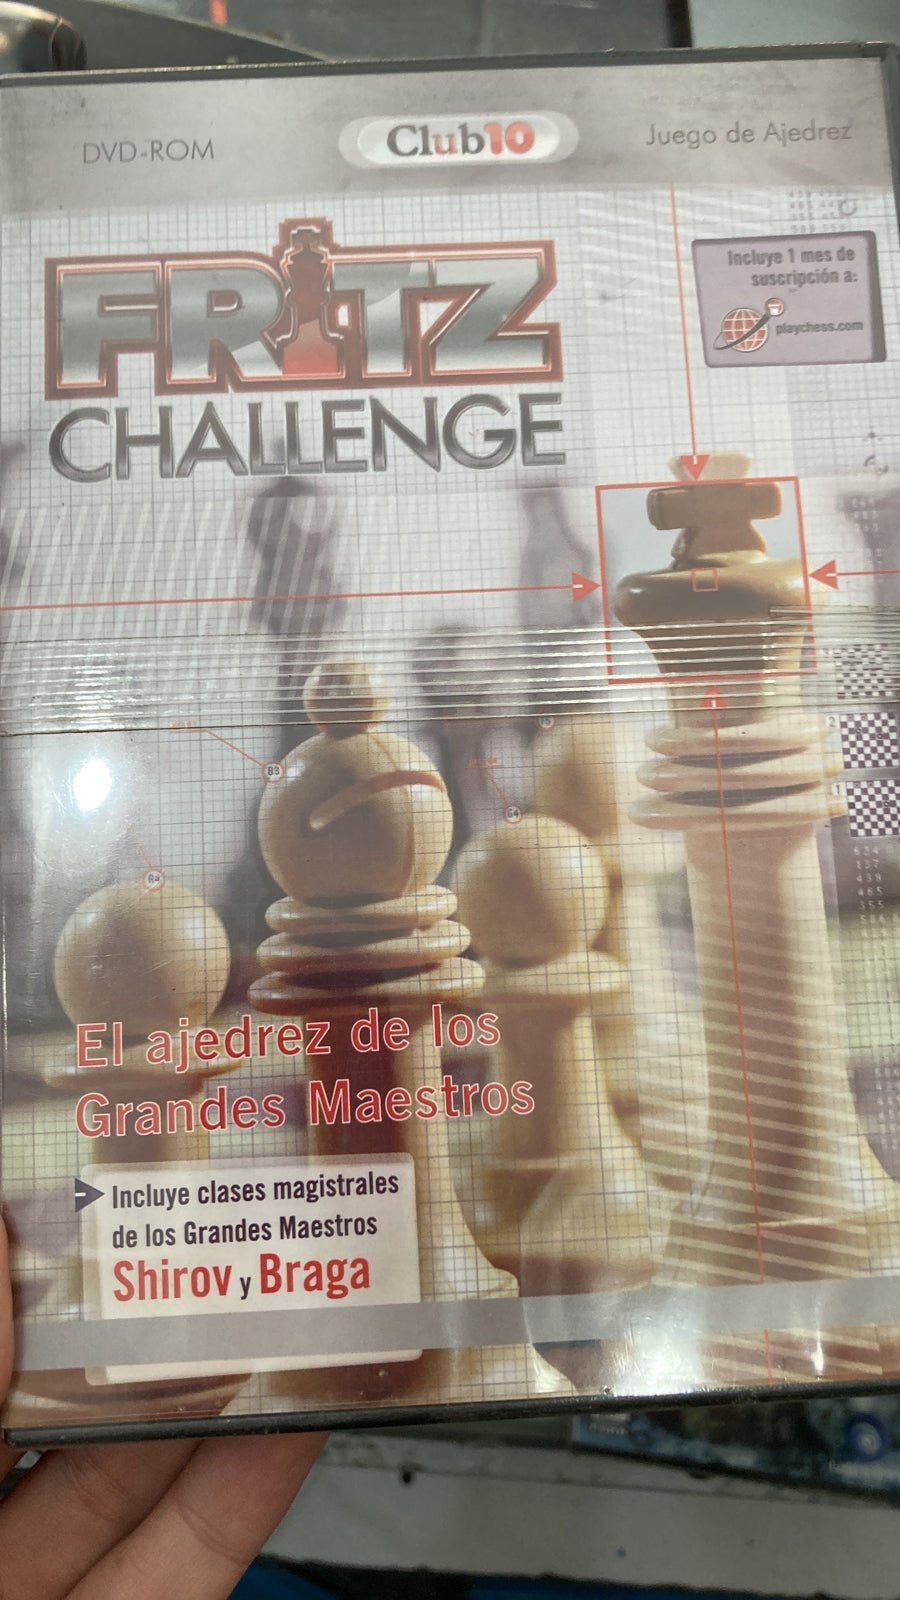 PC FRITZ CHALLENGE - NOORHS Latinoamérica, S.A. de C.V.